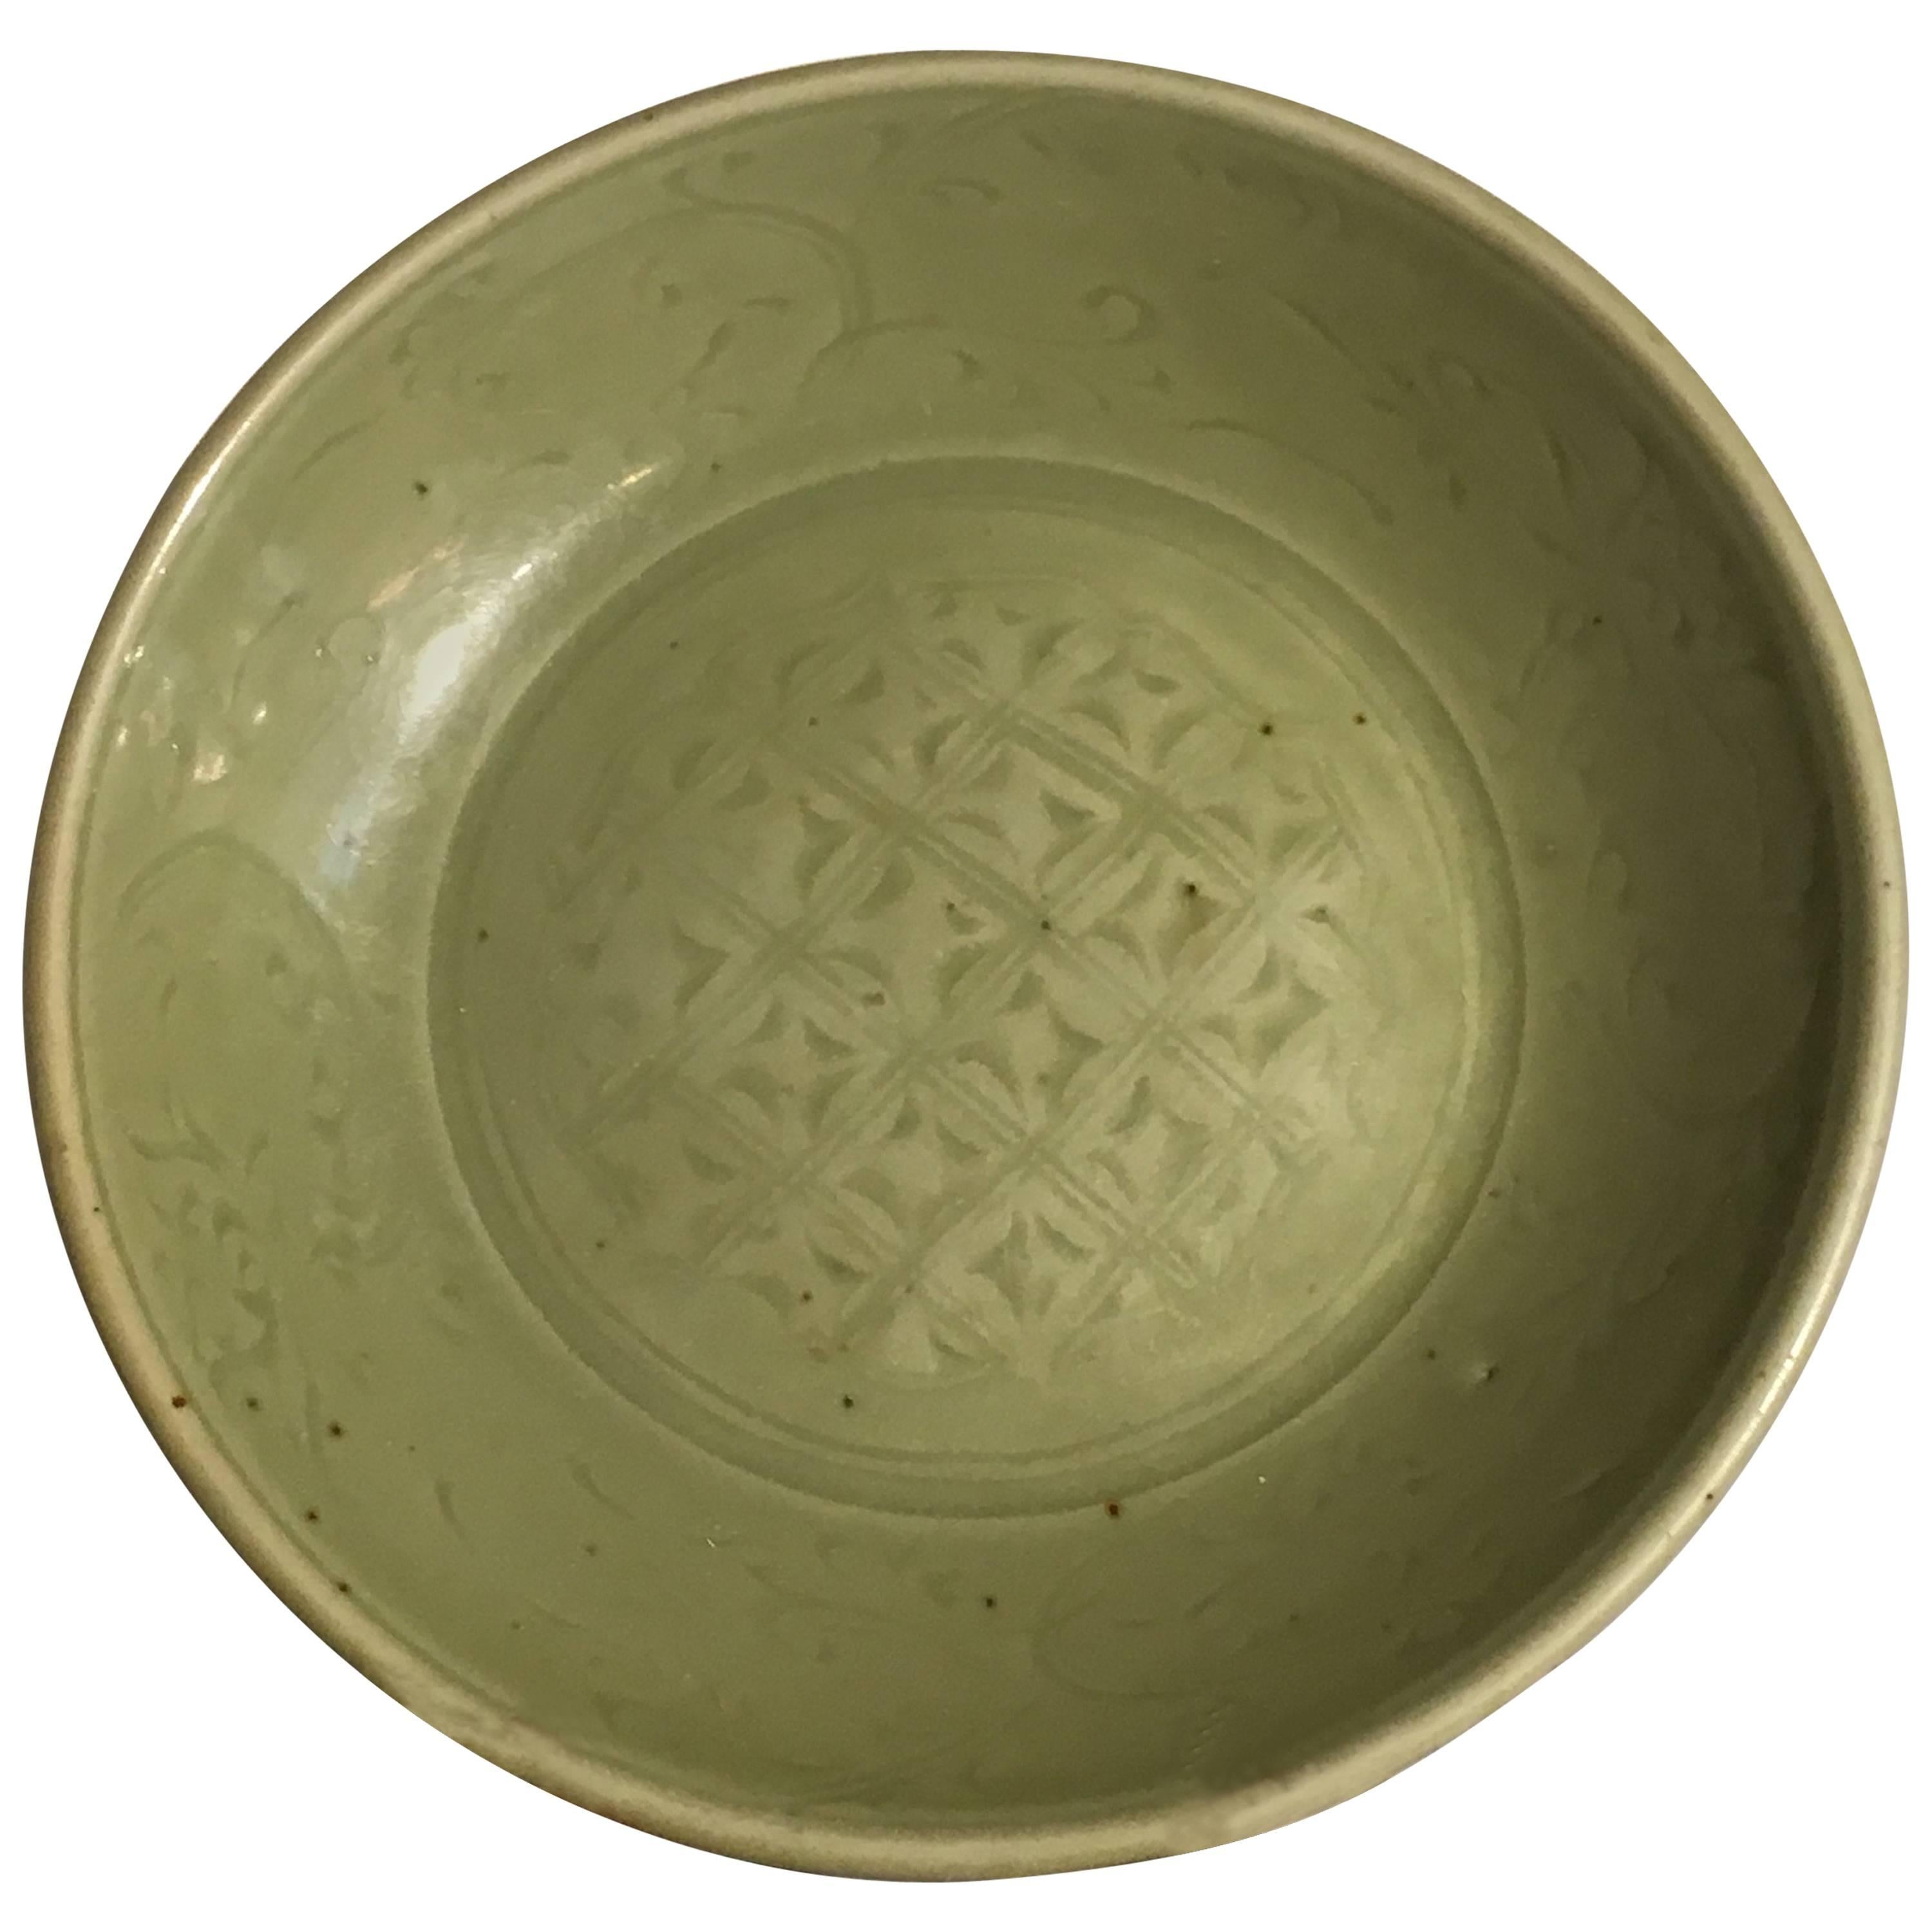 Ming Dynasty Longquan Celadon Dish with Geometric Design, 15th Century